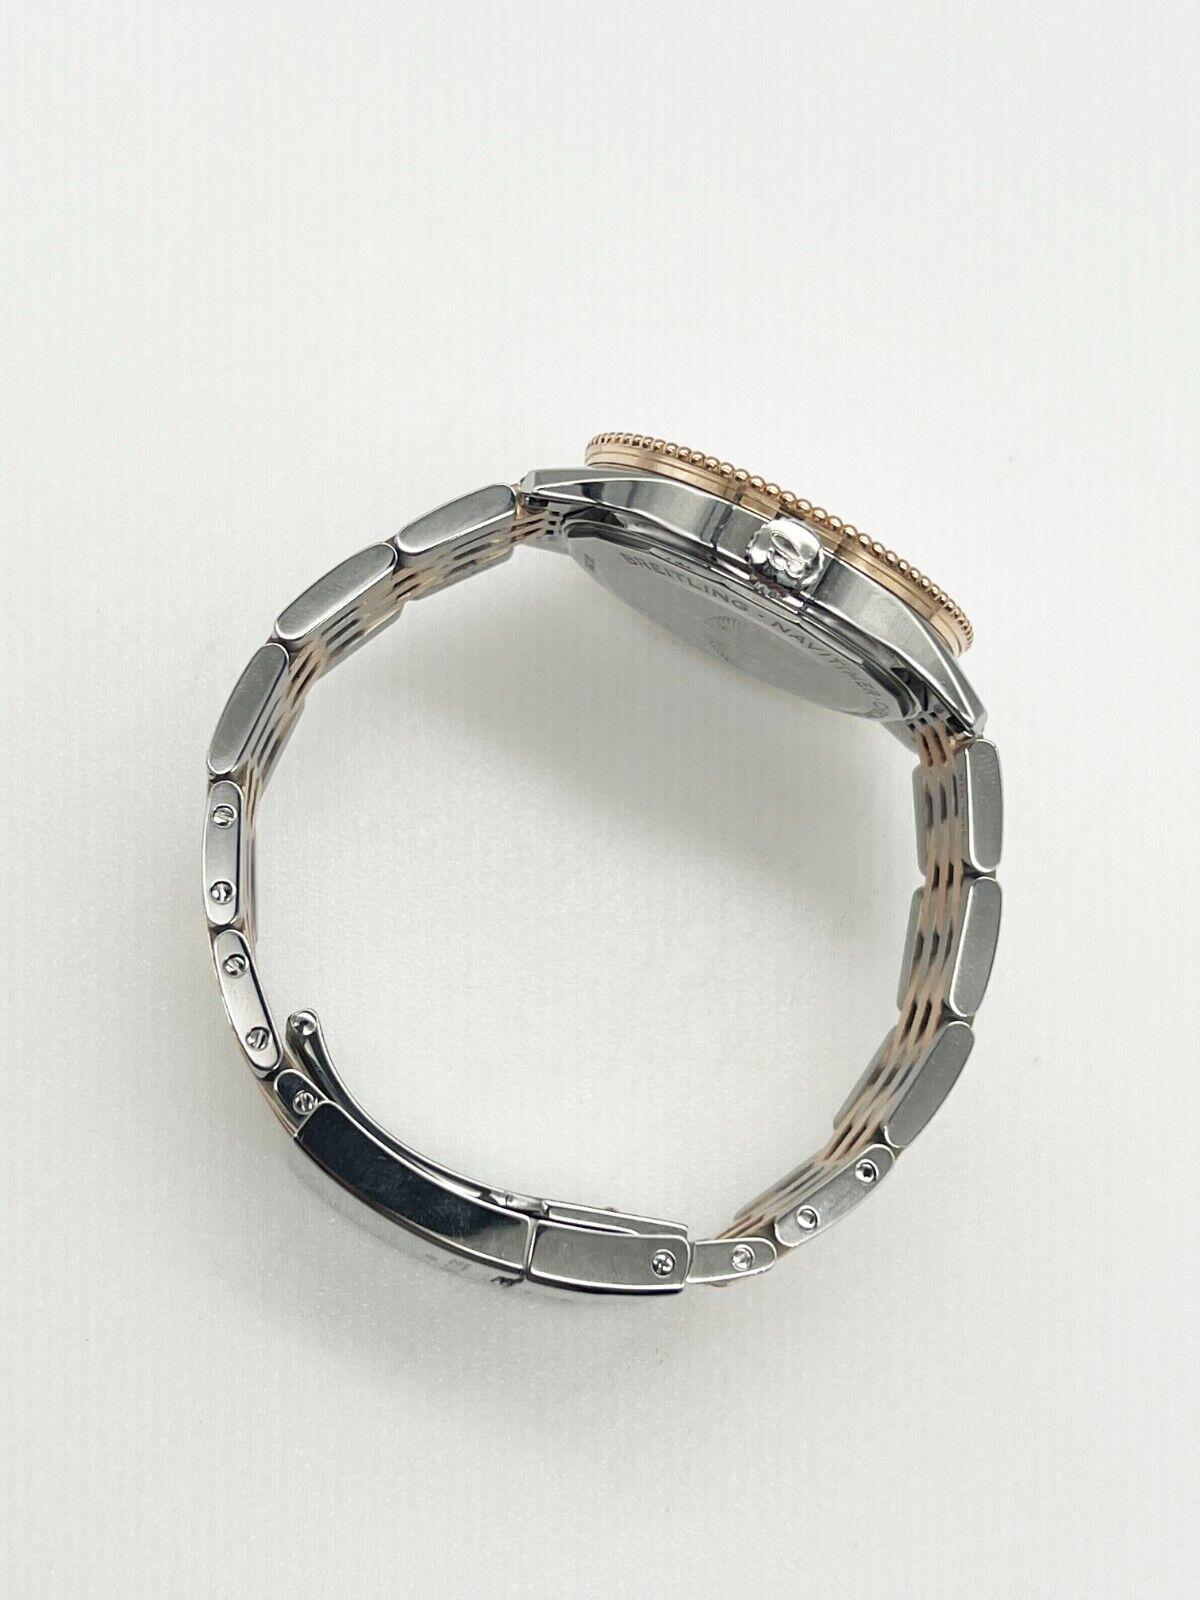 Breitling U17395 Navitimer 35 MOP Montre en acier et or rose 18 carats avec cadran en diamants 2020 en vente 1